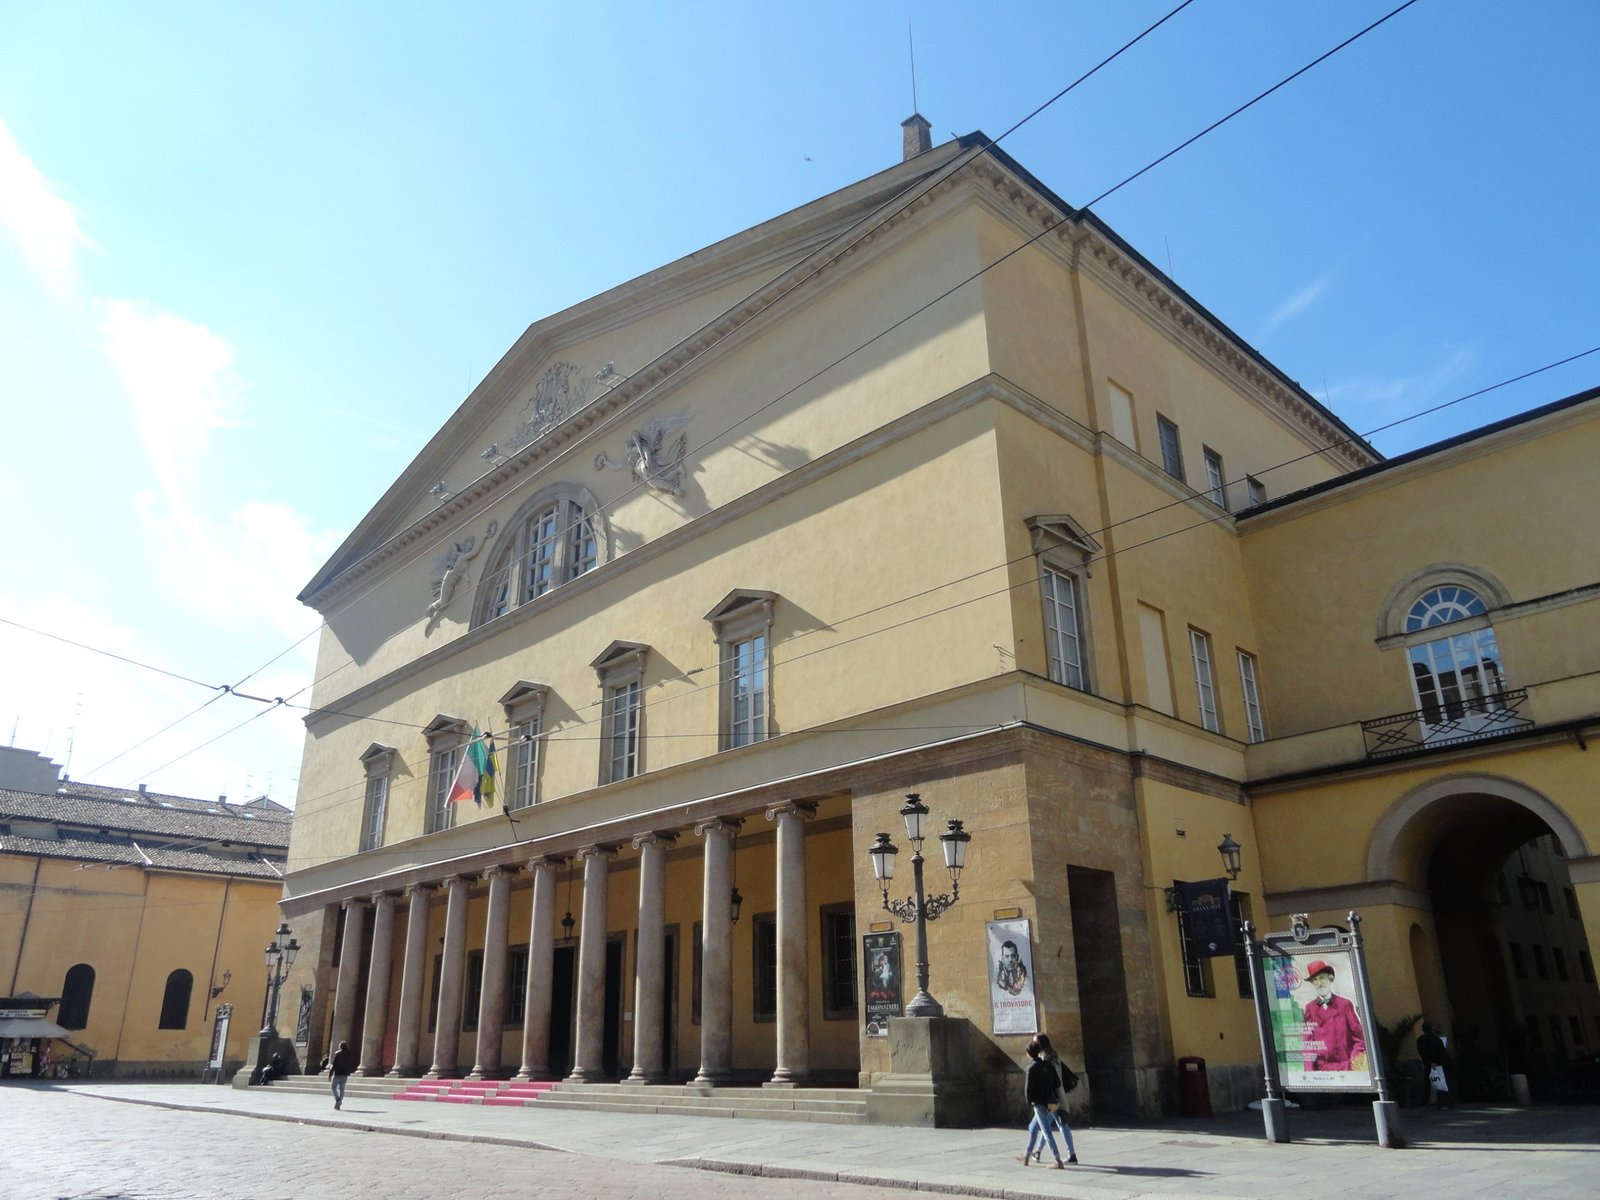 Teatro Regio di Parma, Parma, Italy. ouritalianjourney.com